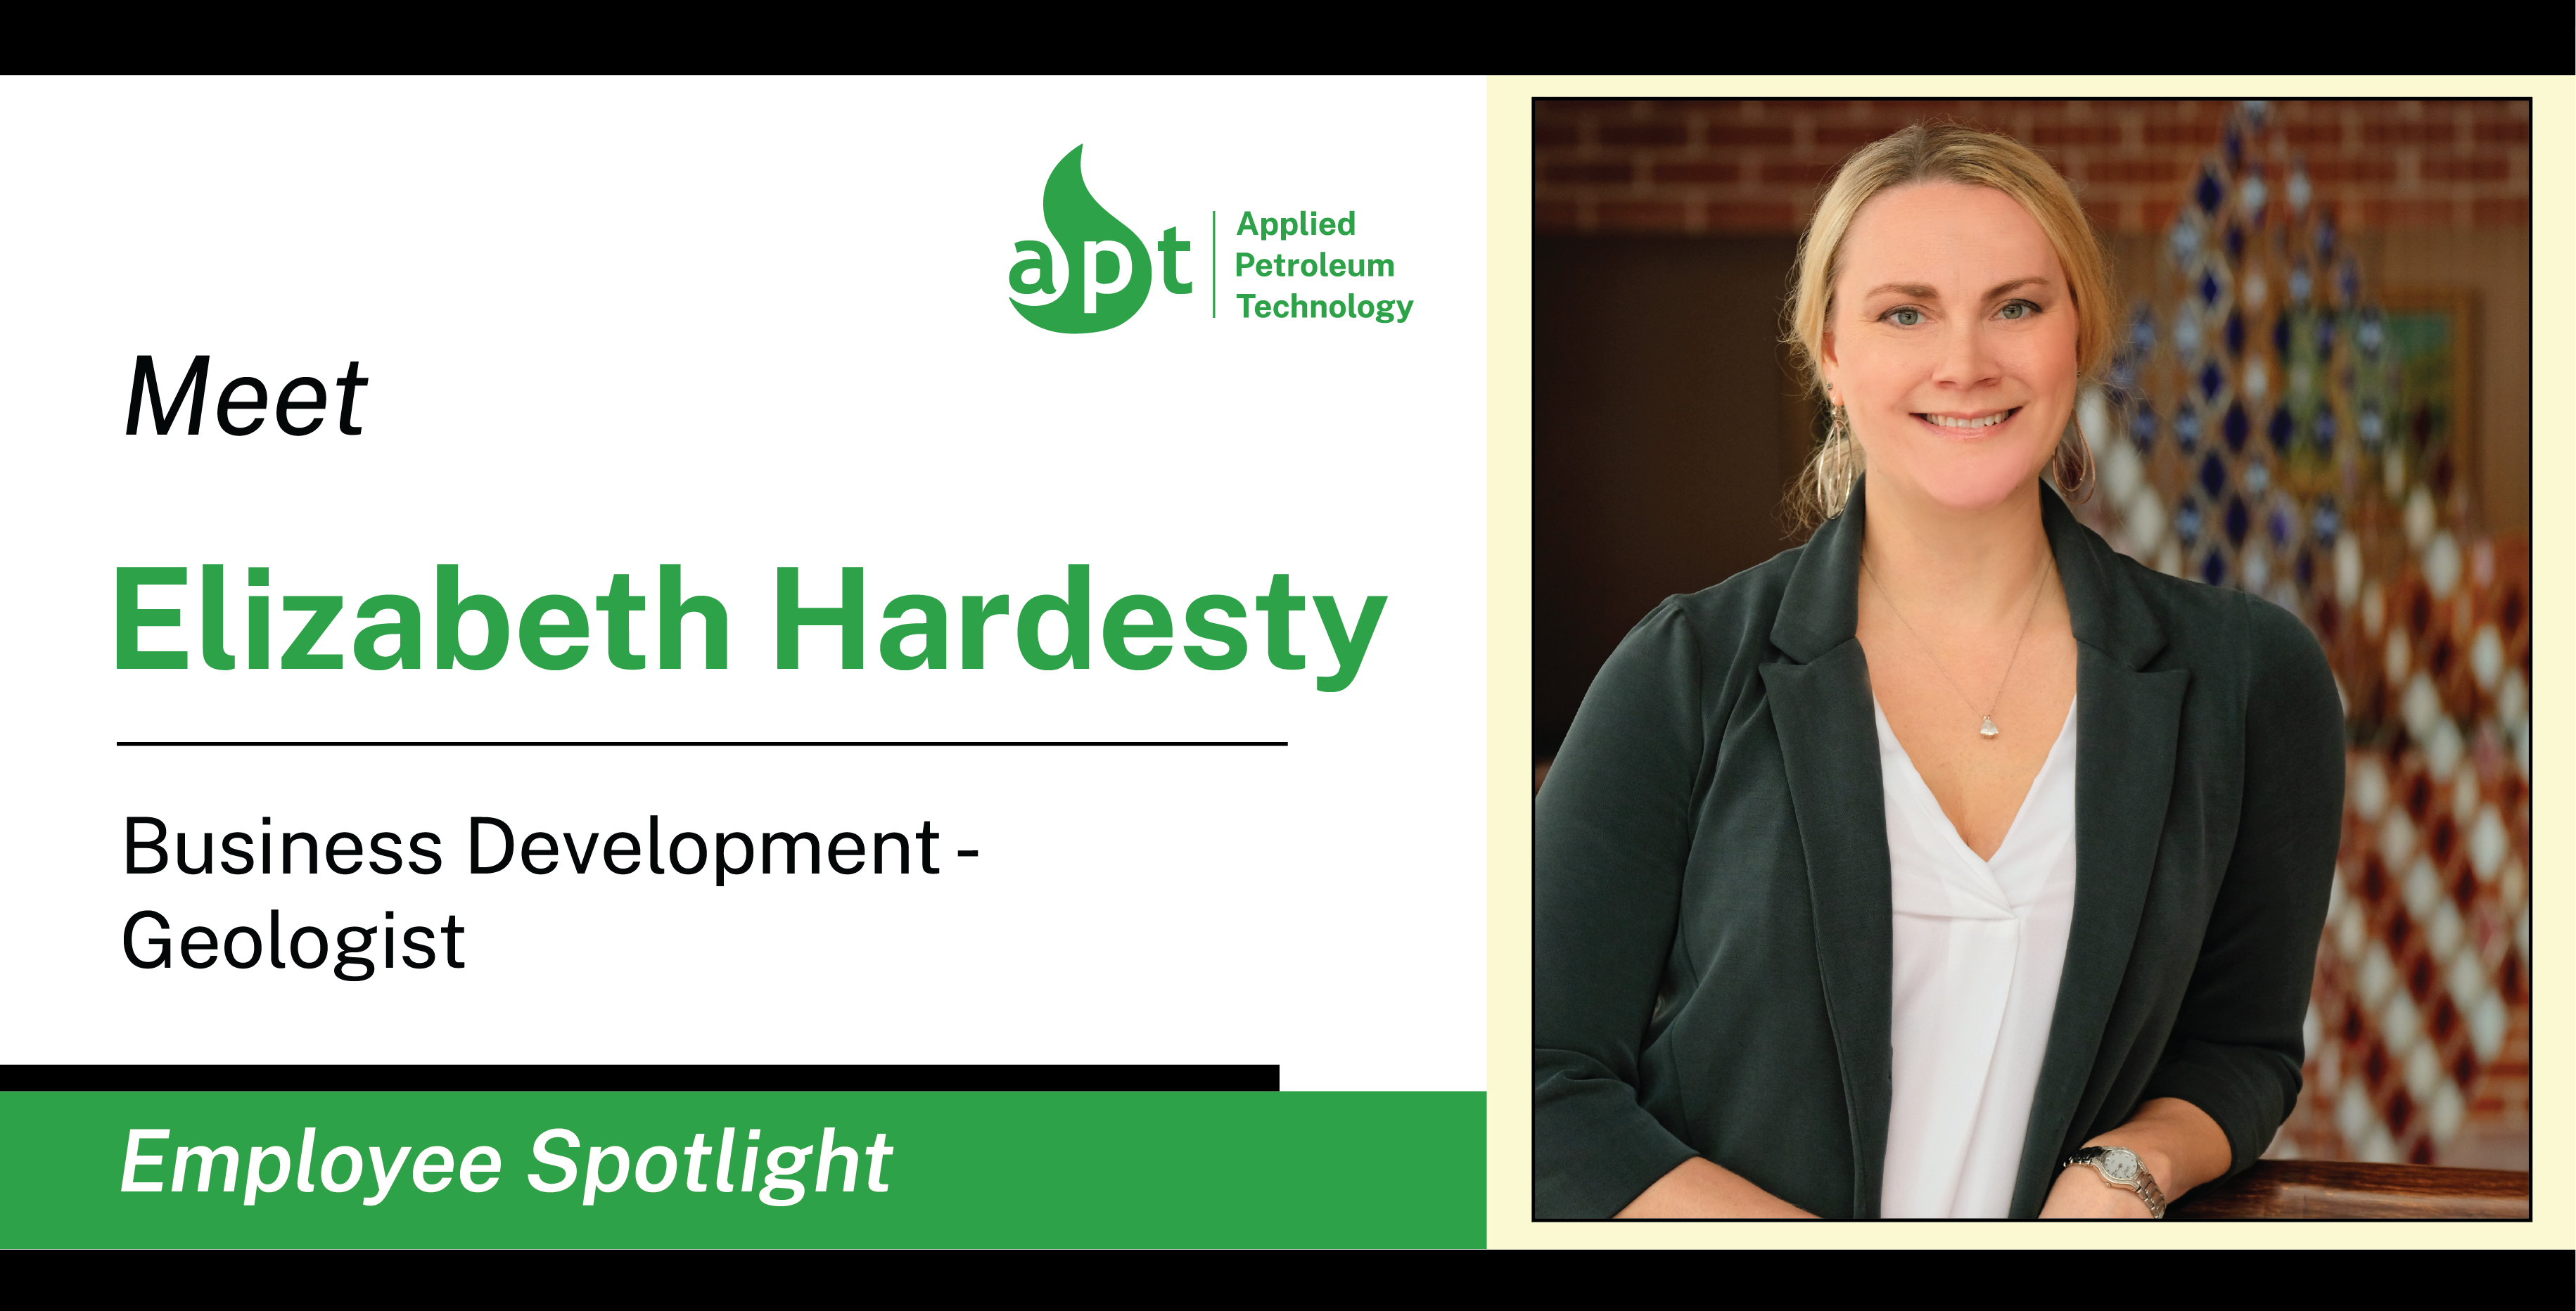 Meet Elizabeth Hardesty US Business Development - Geologist at APT